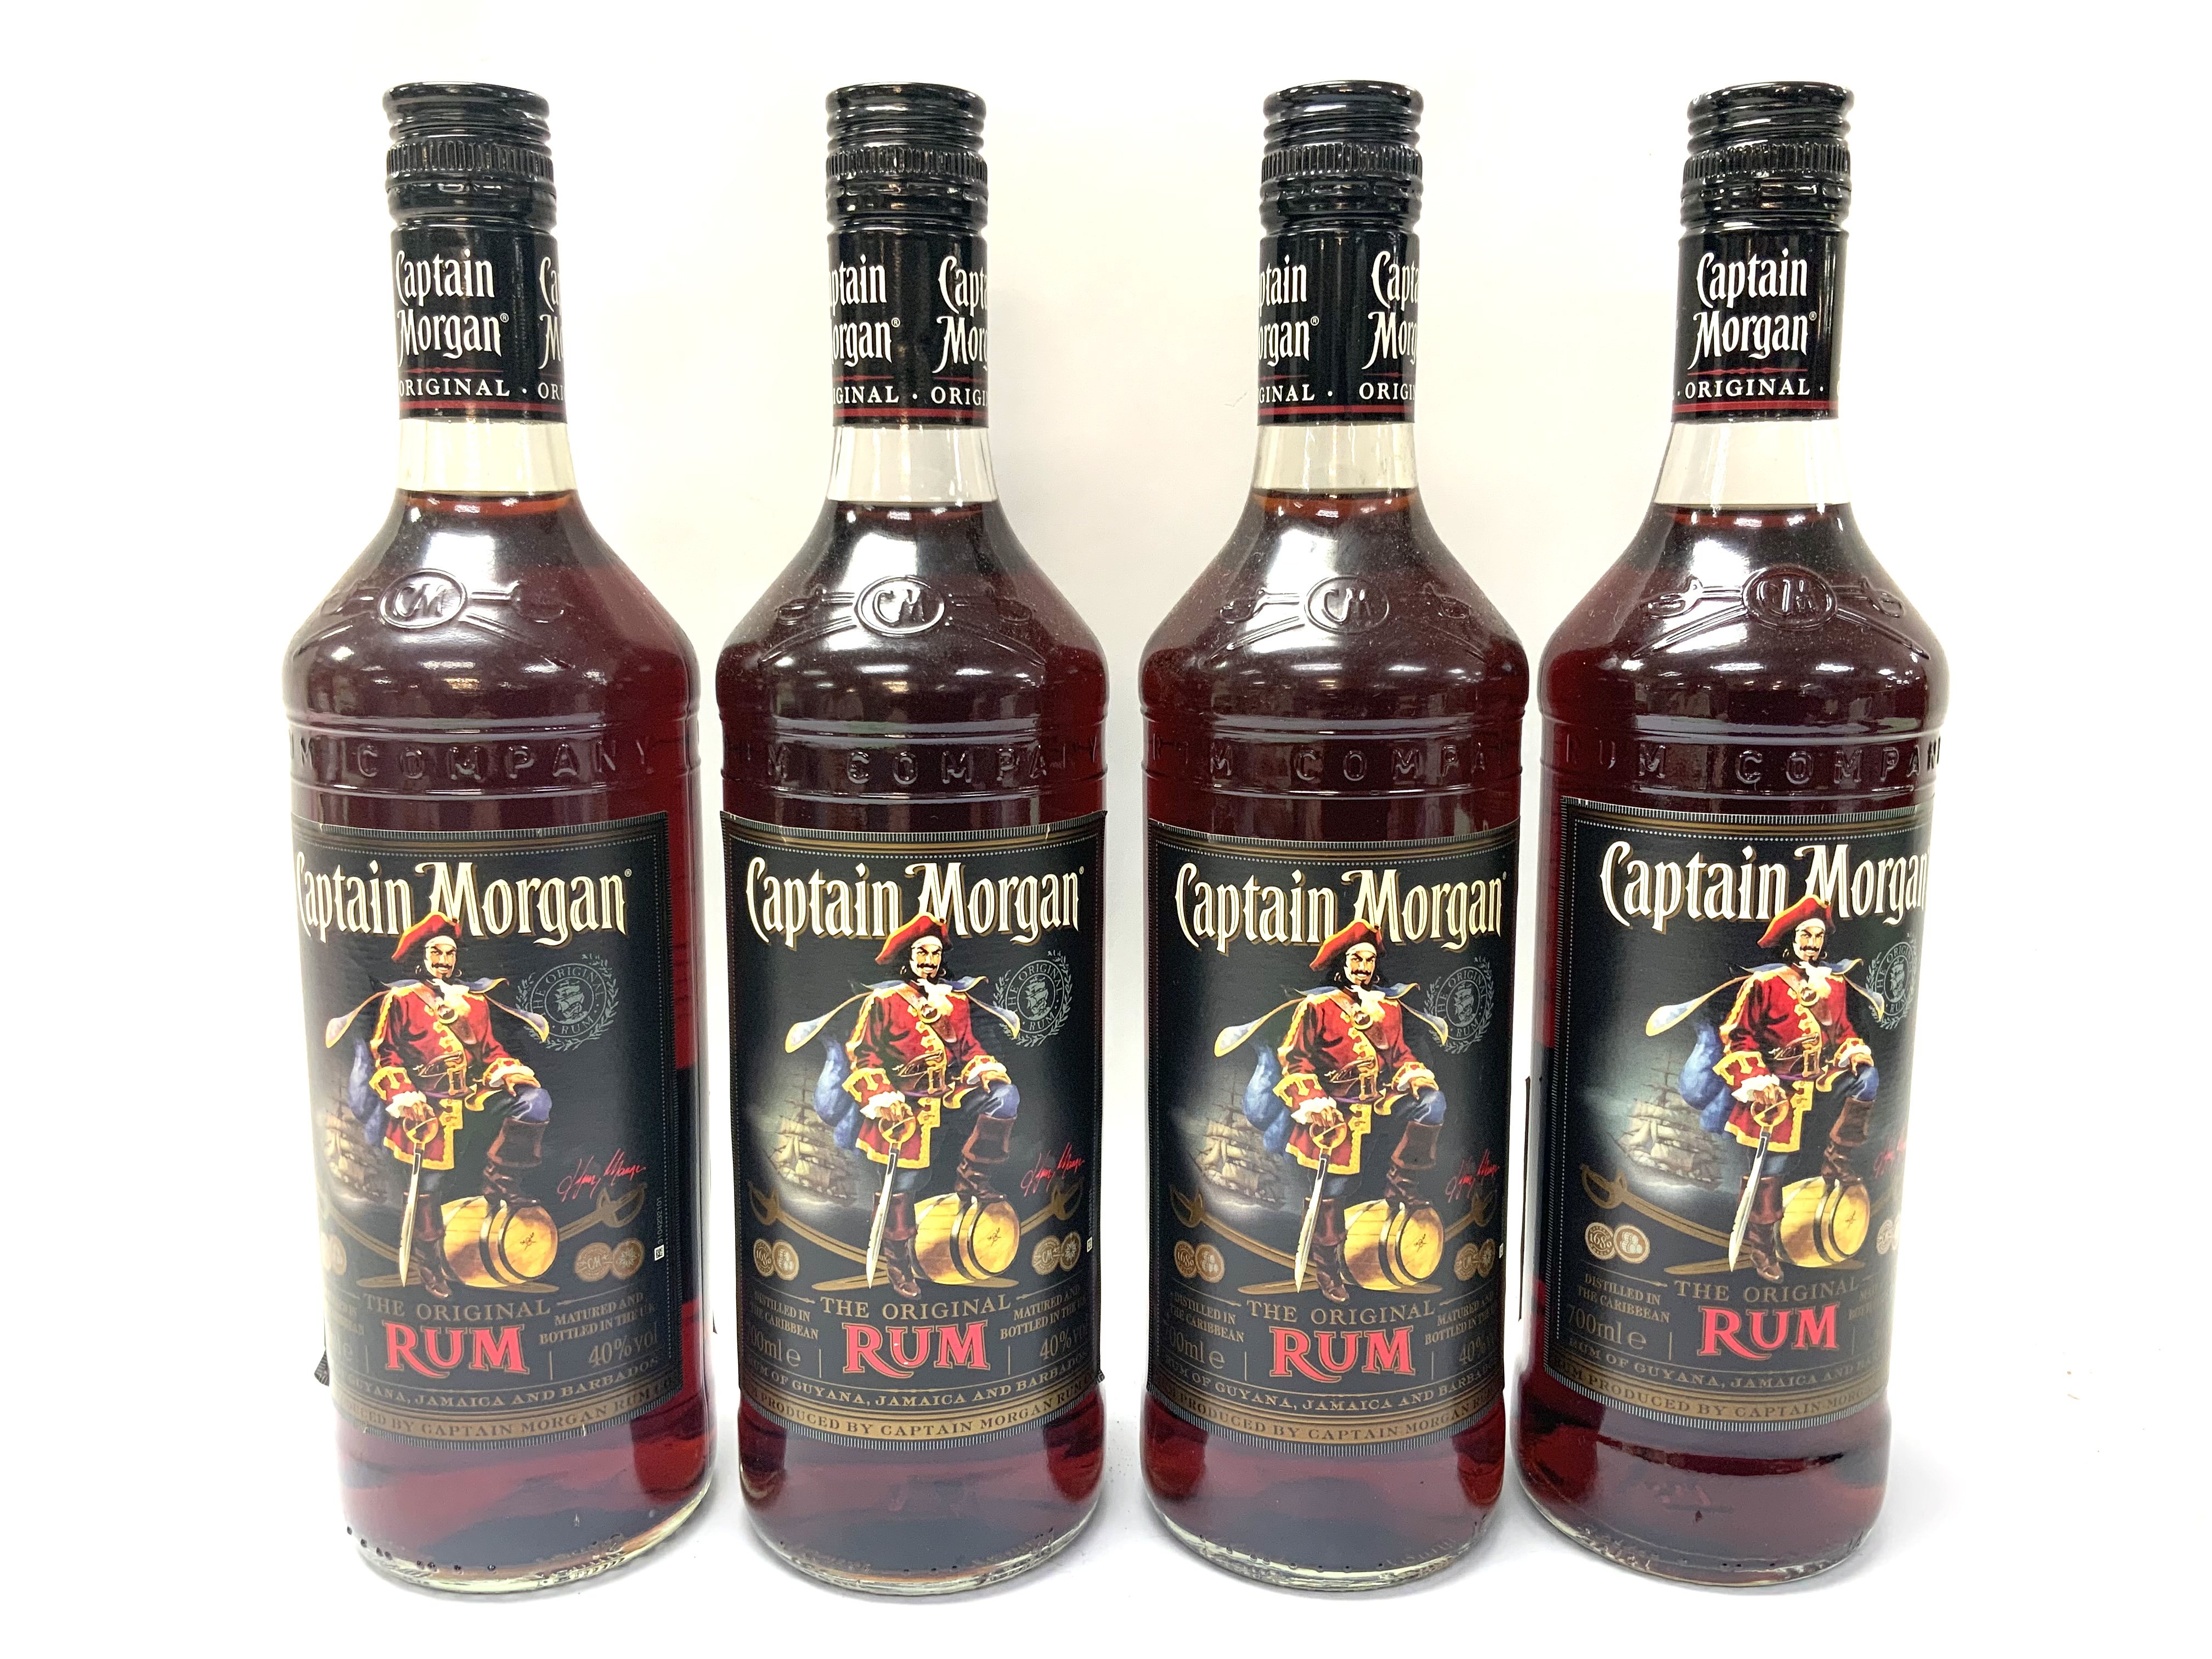 4 bottles of Captain Morgan Rum. (D)